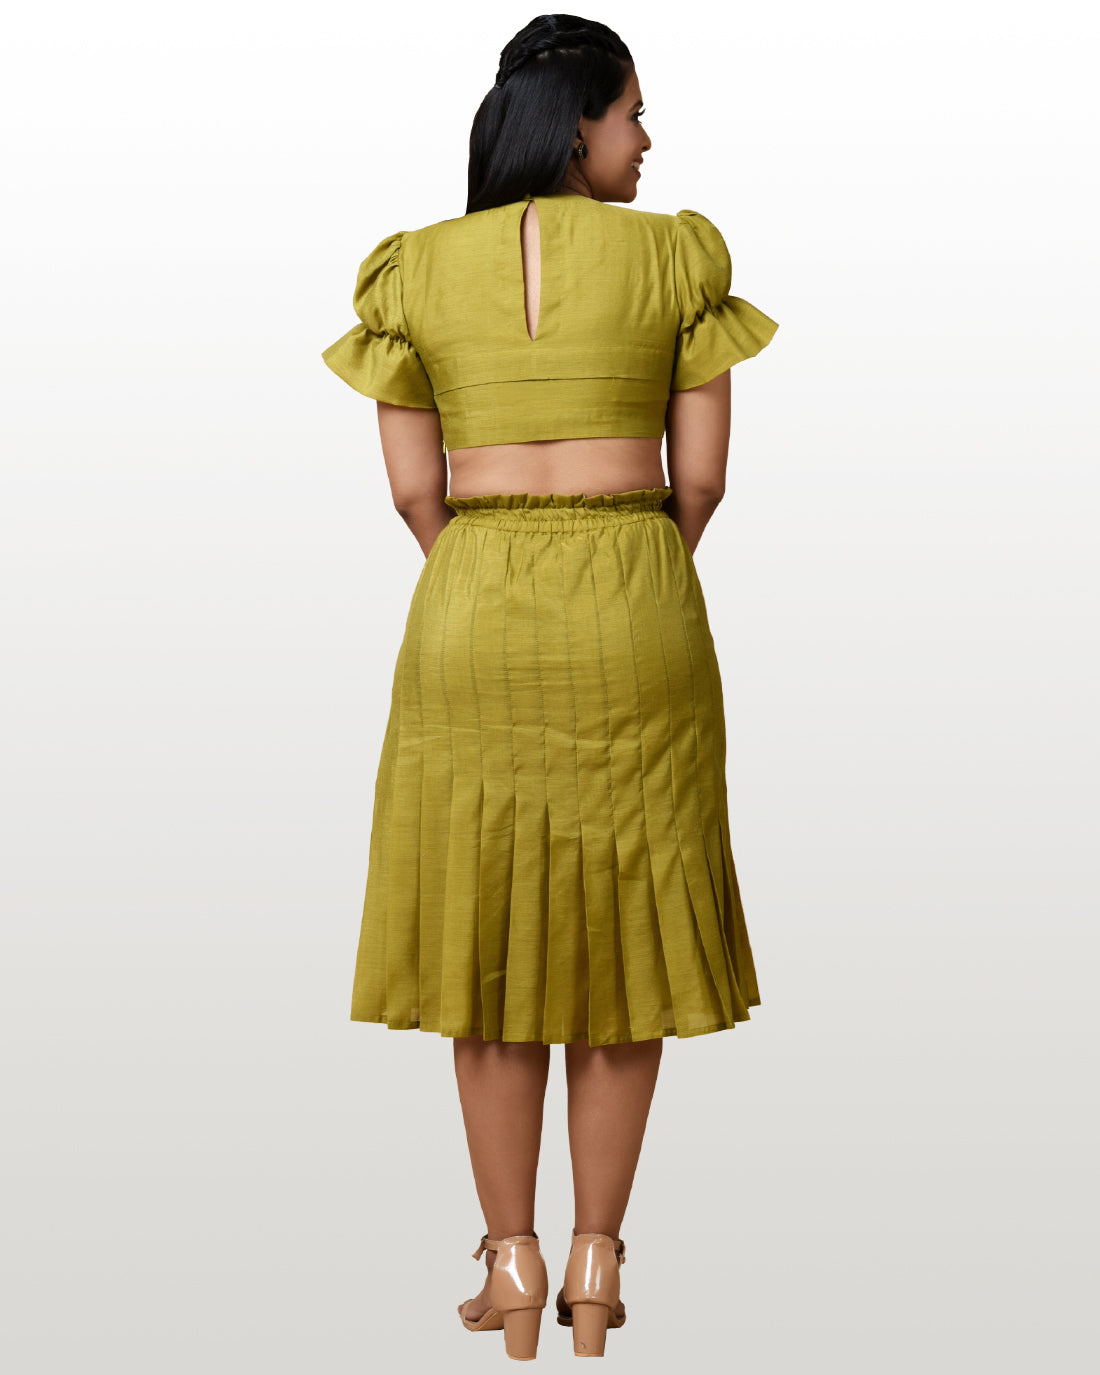 Urban Olive Green Hand Embroidered Skirt Set